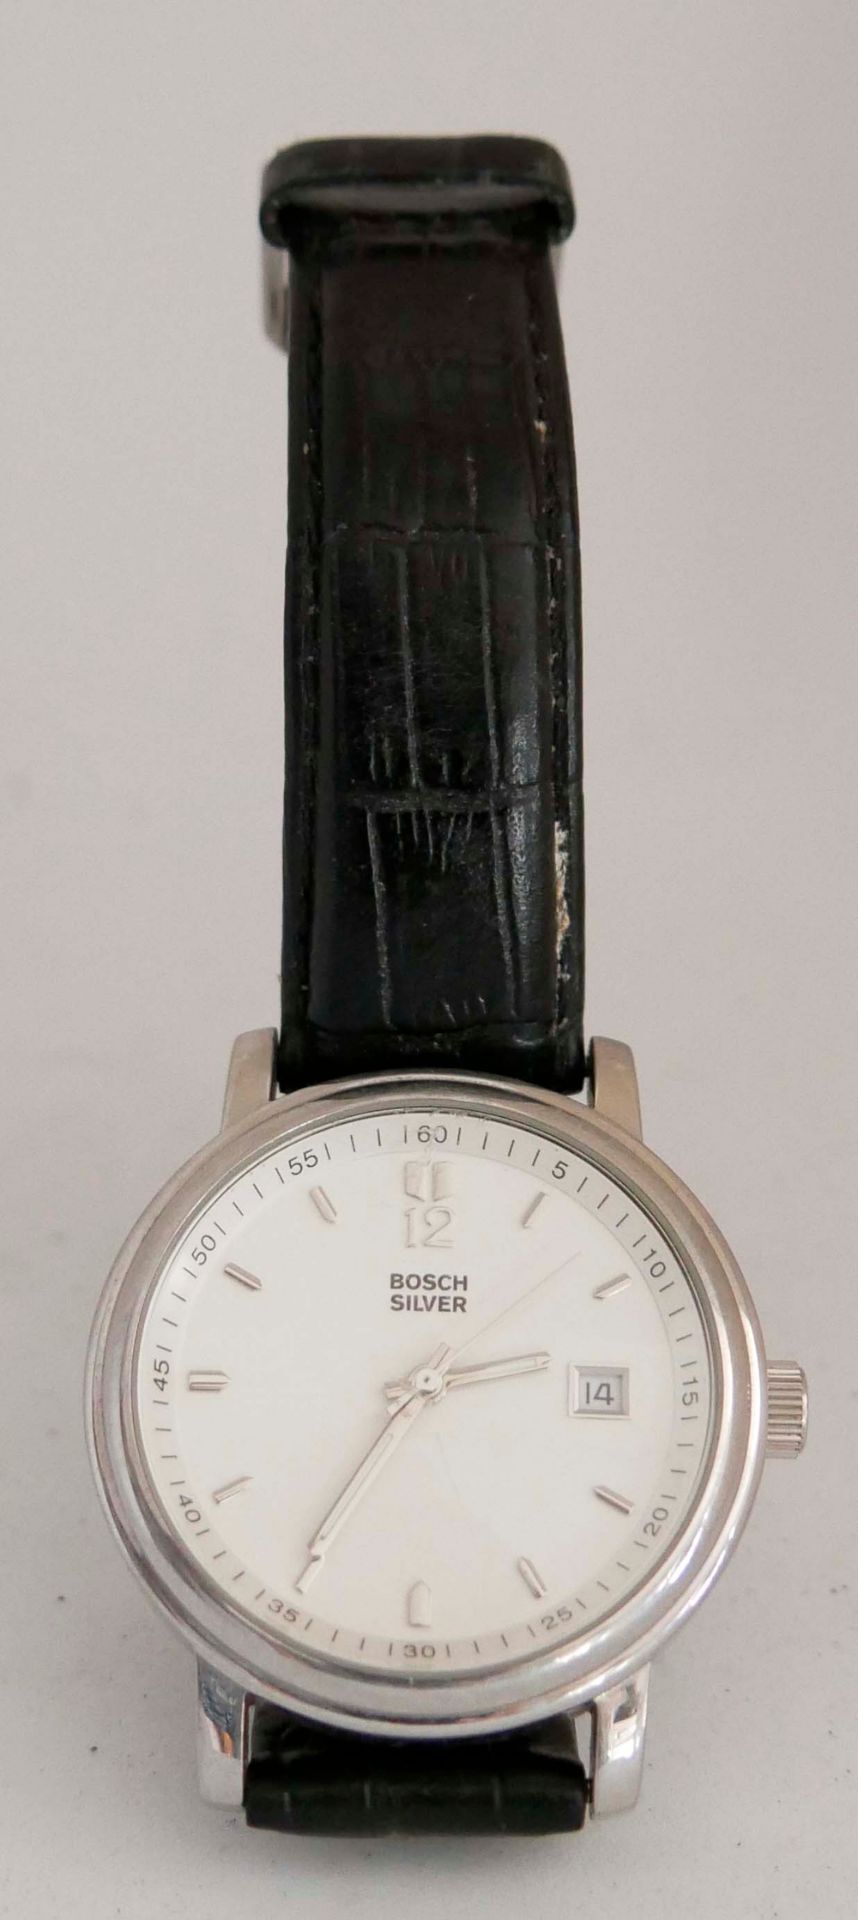 Herren Armbanduhr, Automatik "Bosch Silver". Funktion geprüft.